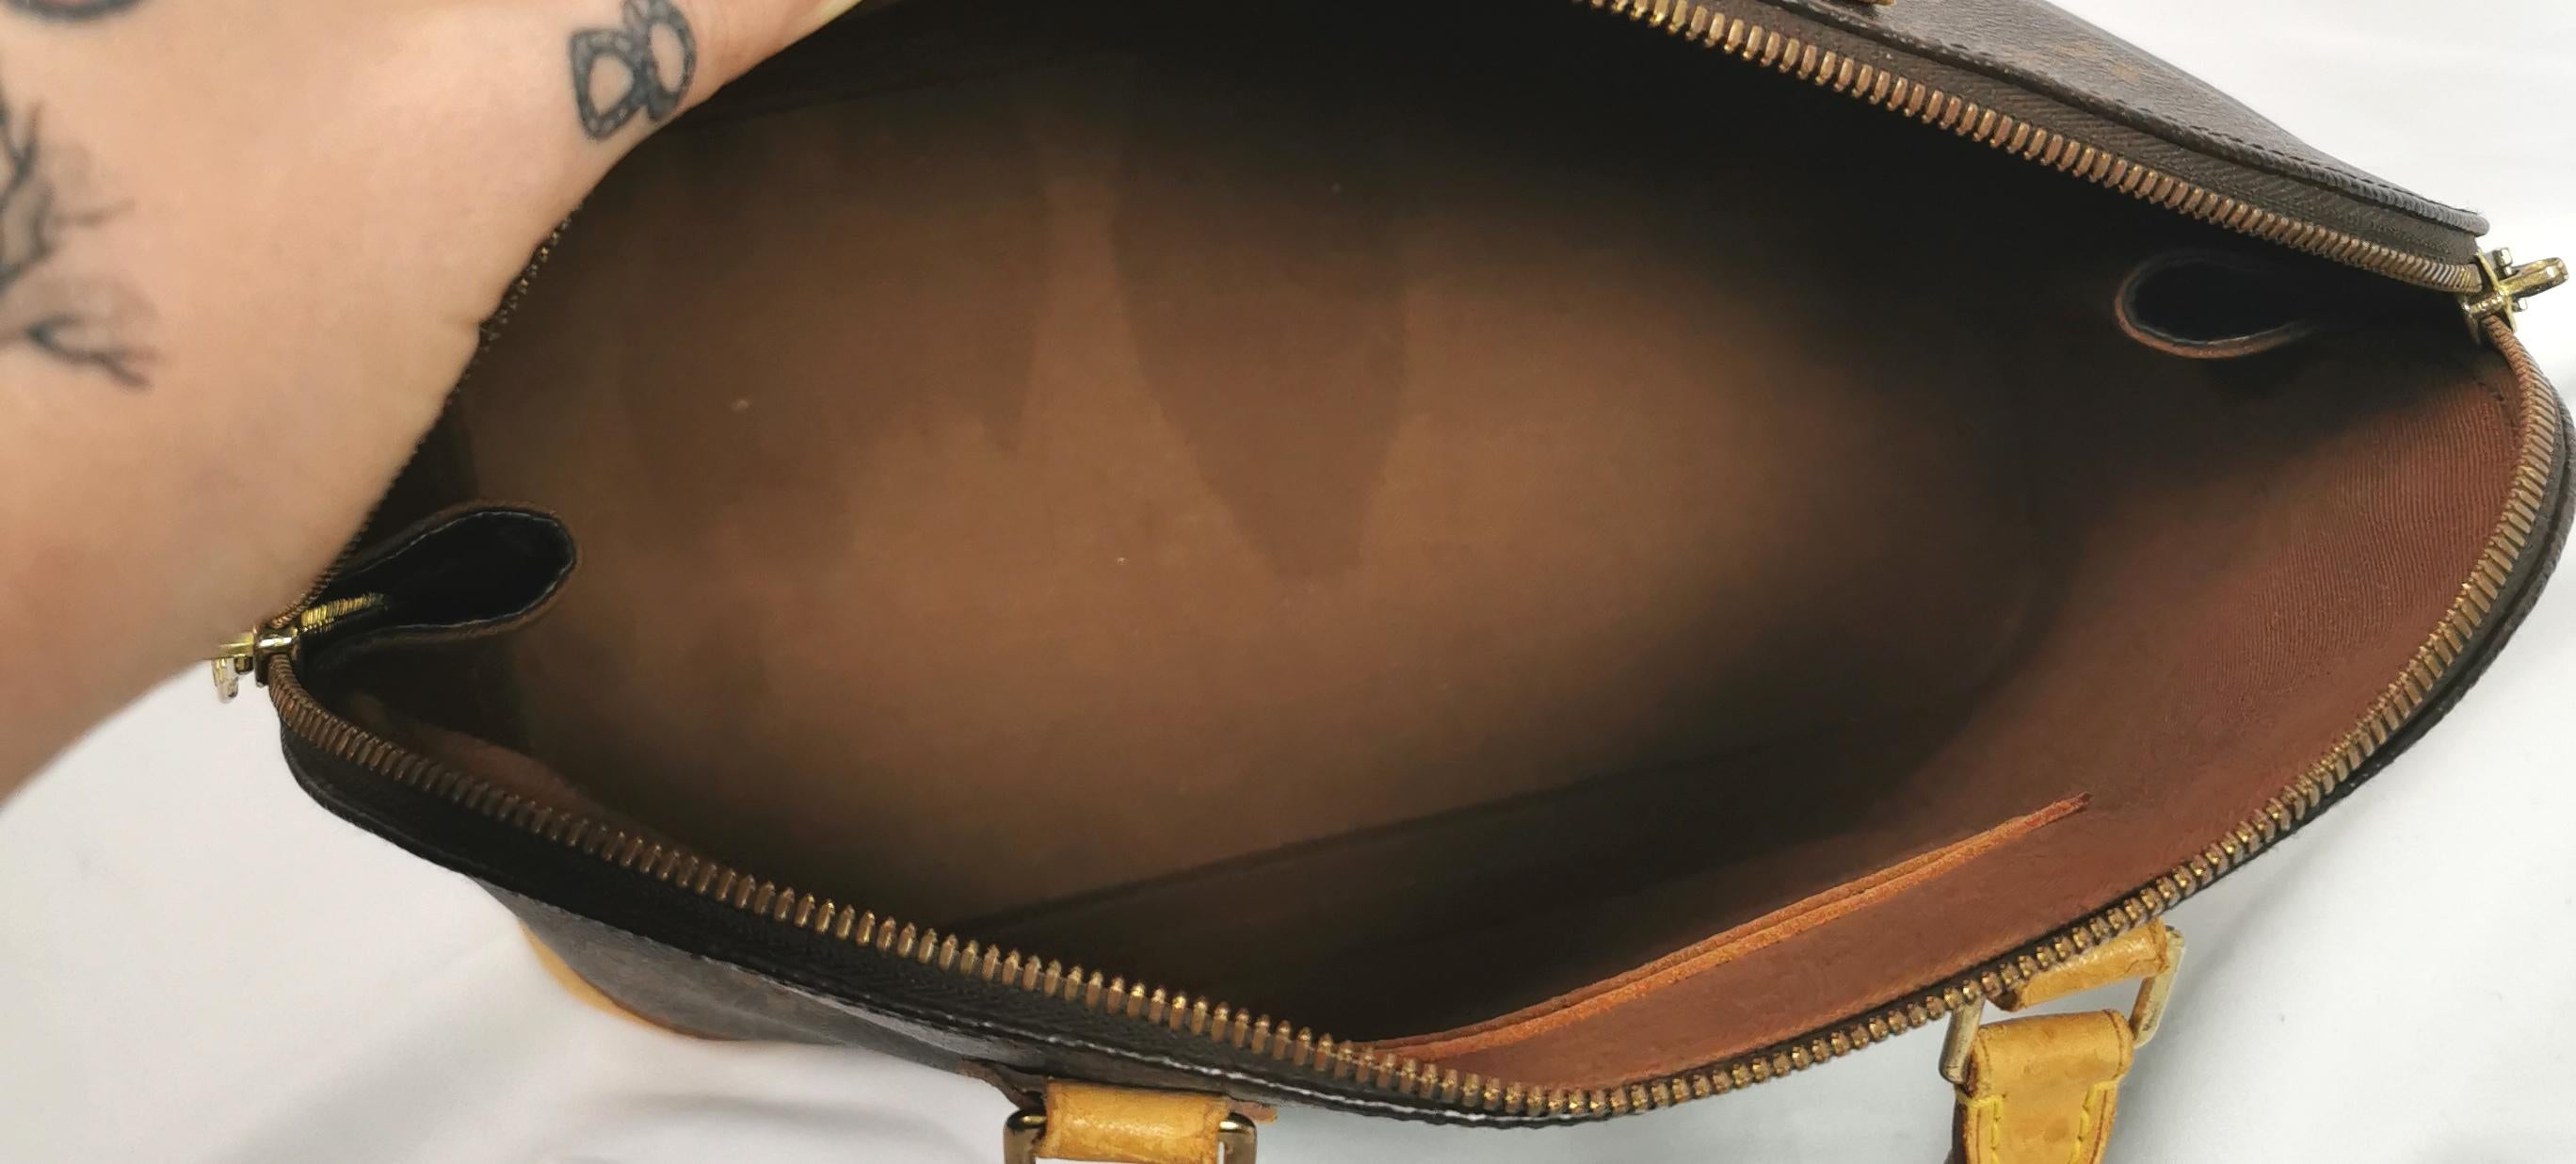 Vintage Louis Vuitton Alma MM handbag, top handle, 1998 For Sale 7